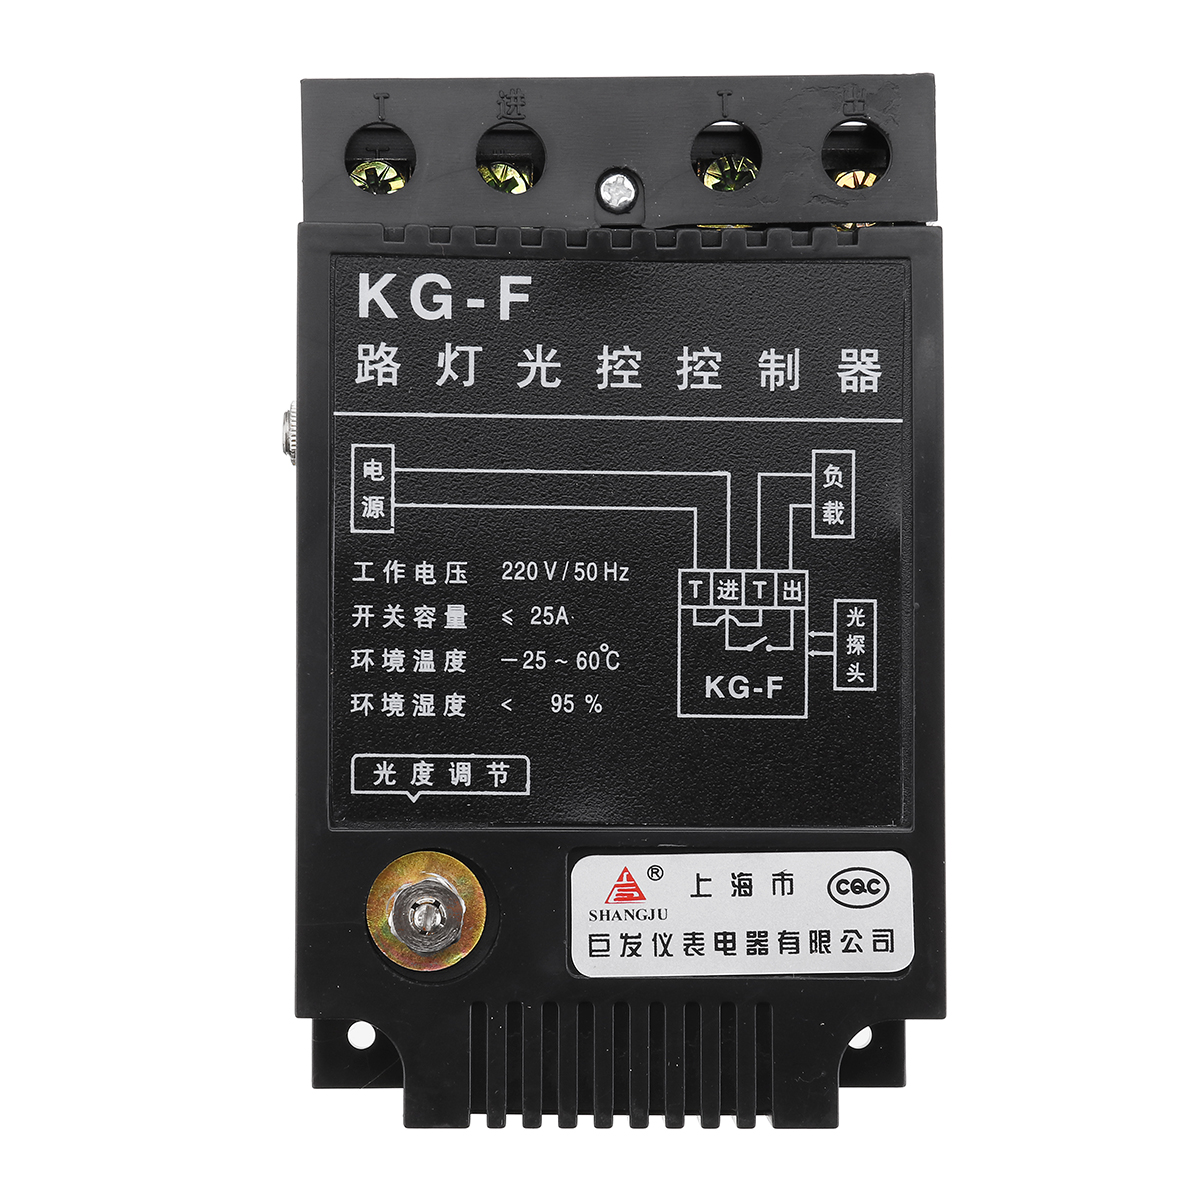 KG-F-220V-Light-Control-Switch-Automatic-Corridor-Light-Sensor-Adjustable-Intelligent-Street-Lamp-Co-1420007-3